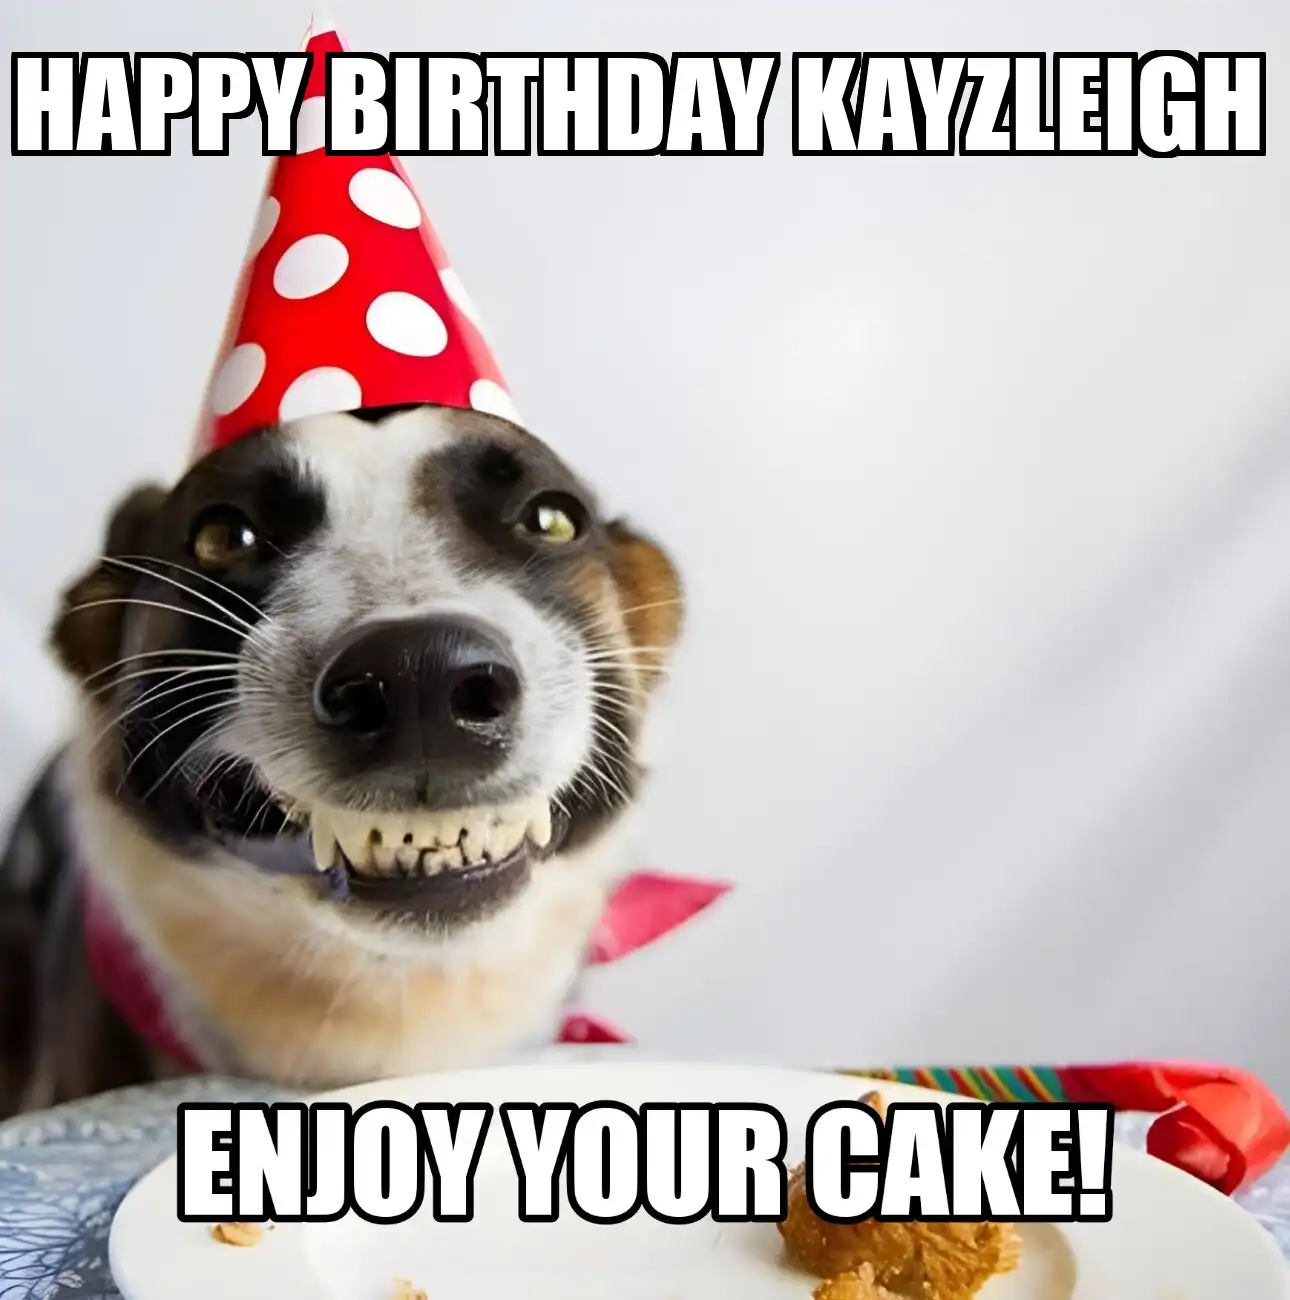 Happy Birthday Kayzleigh Enjoy Your Cake Dog Meme